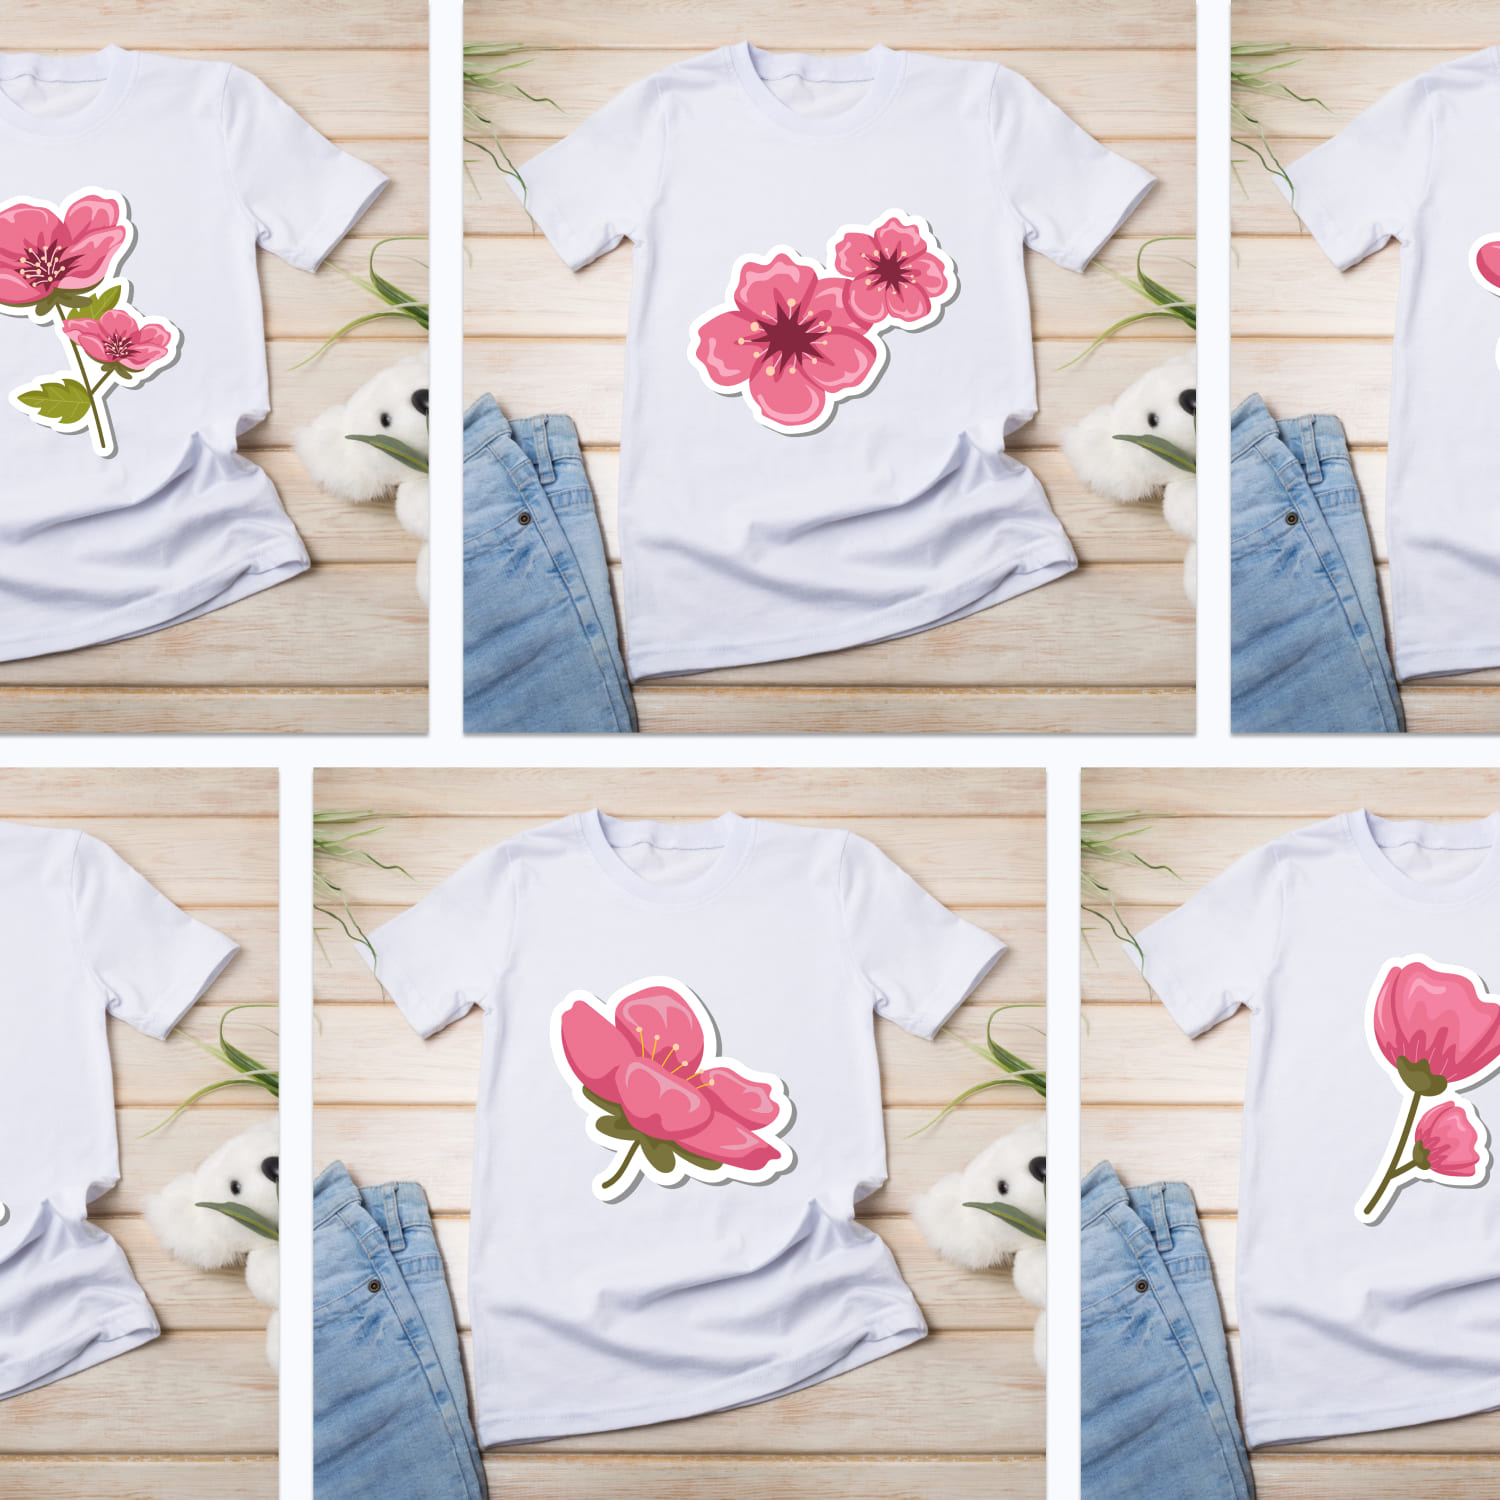 Preview cherry blossom t shirt designs.